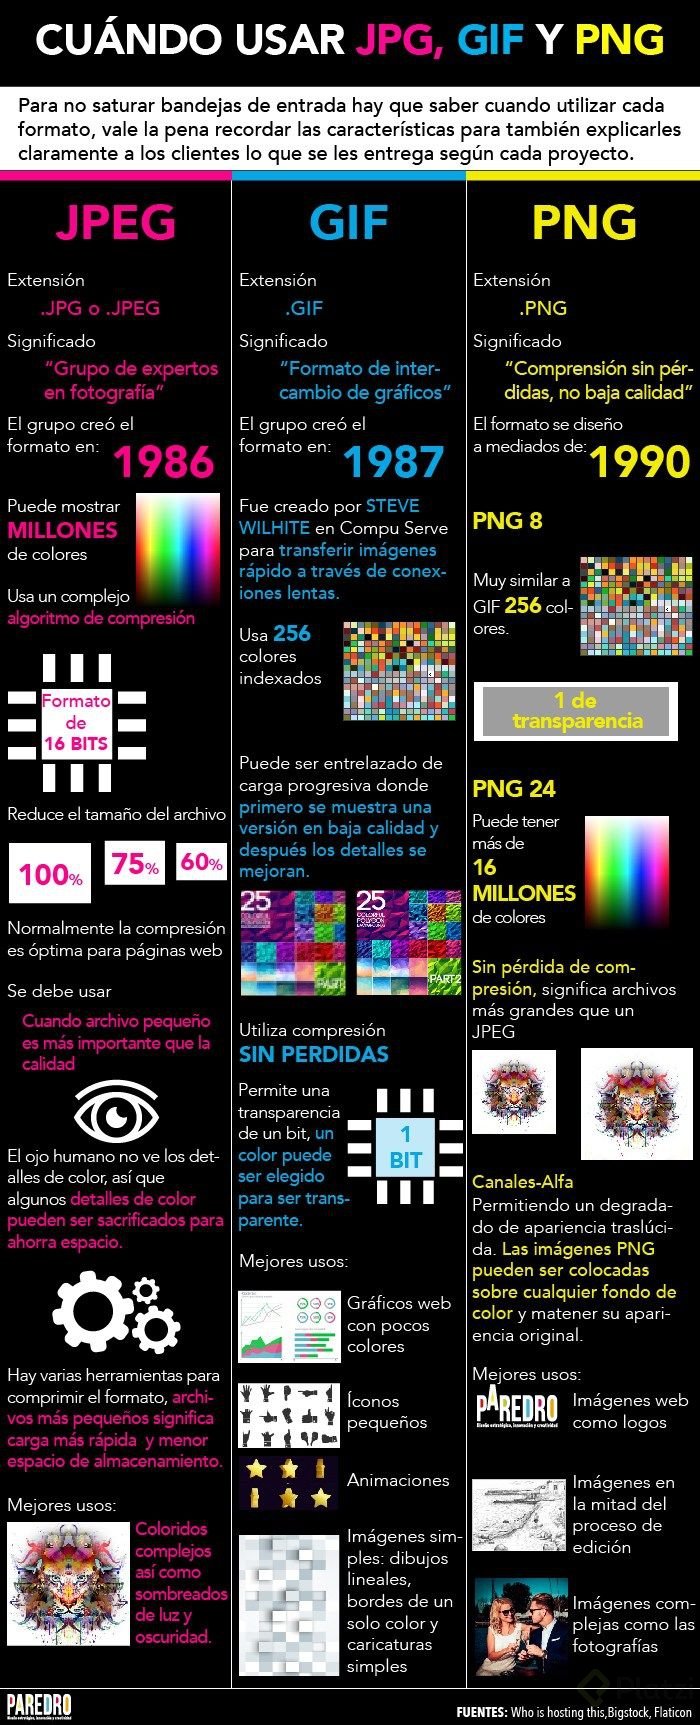 JPG vs PNG vs GIF #infografia #infographic #design - TICs y FormaciÃ³n.jpg